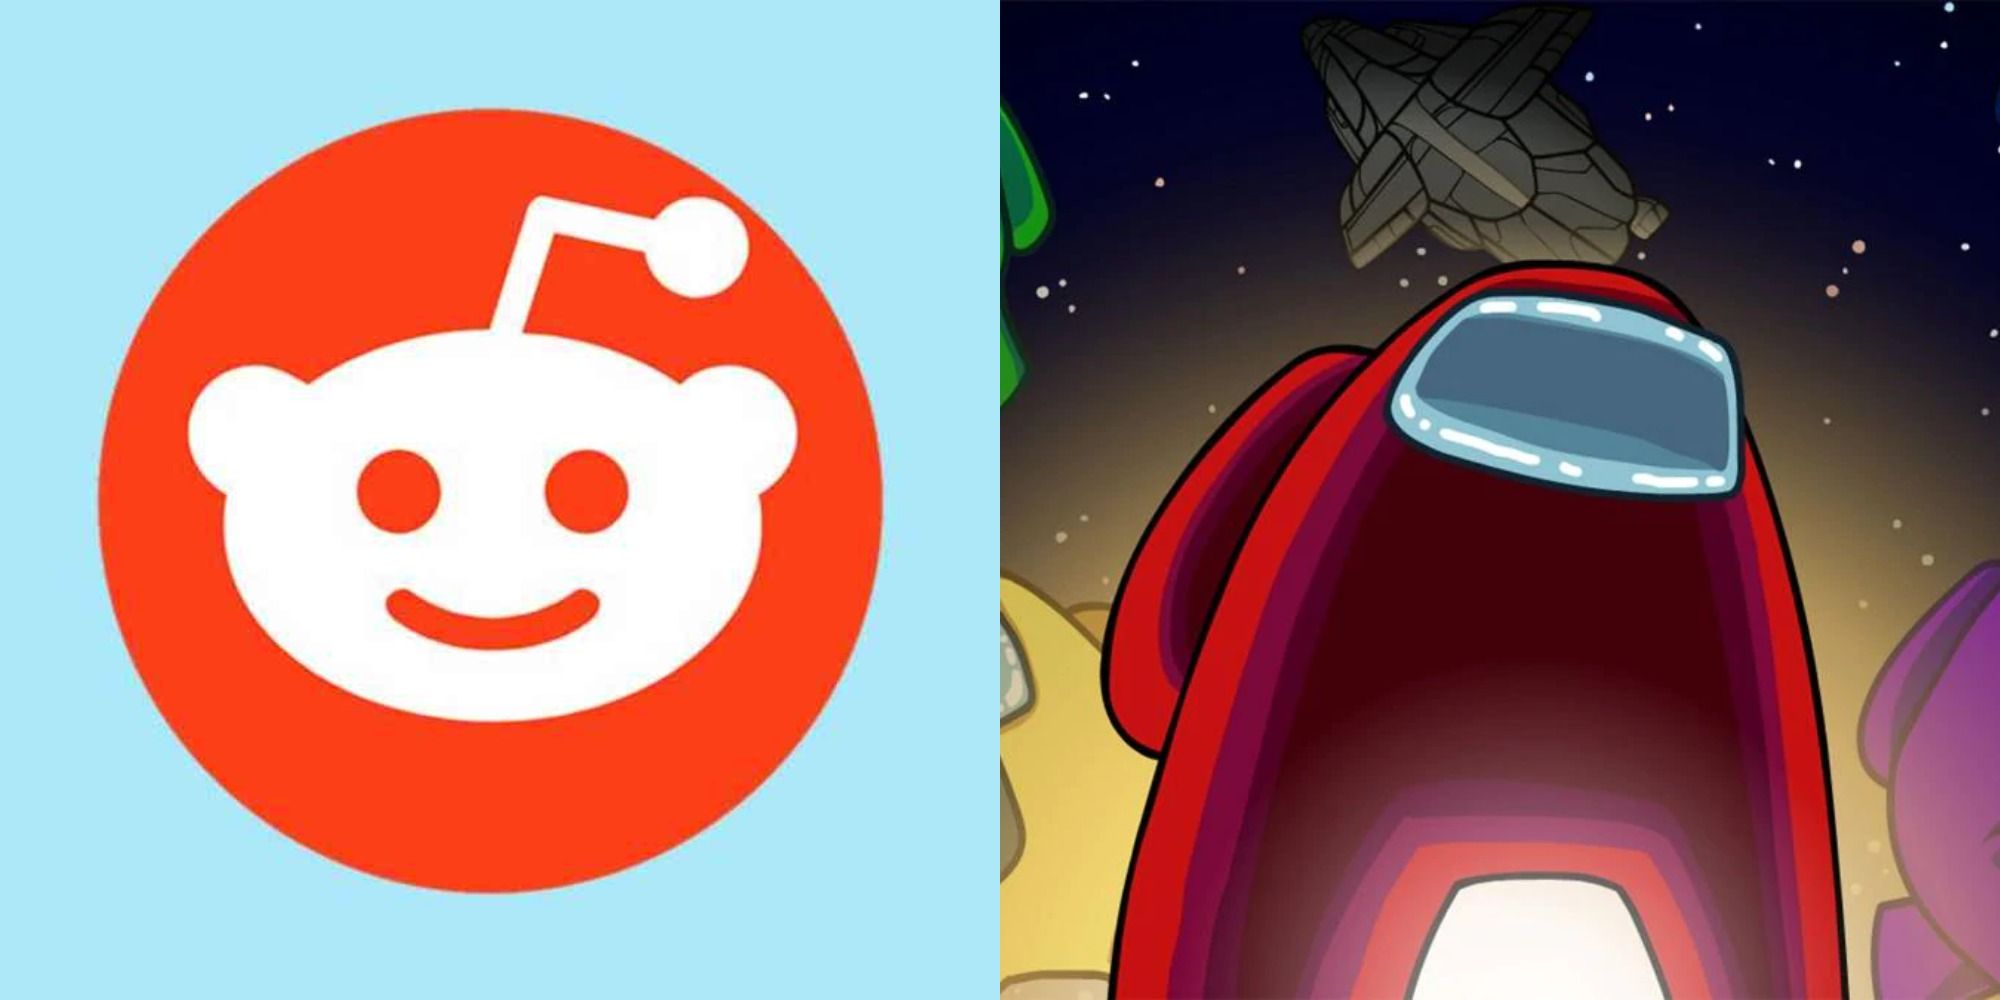 Split image showing the Reddit logo and artwork for Among Us